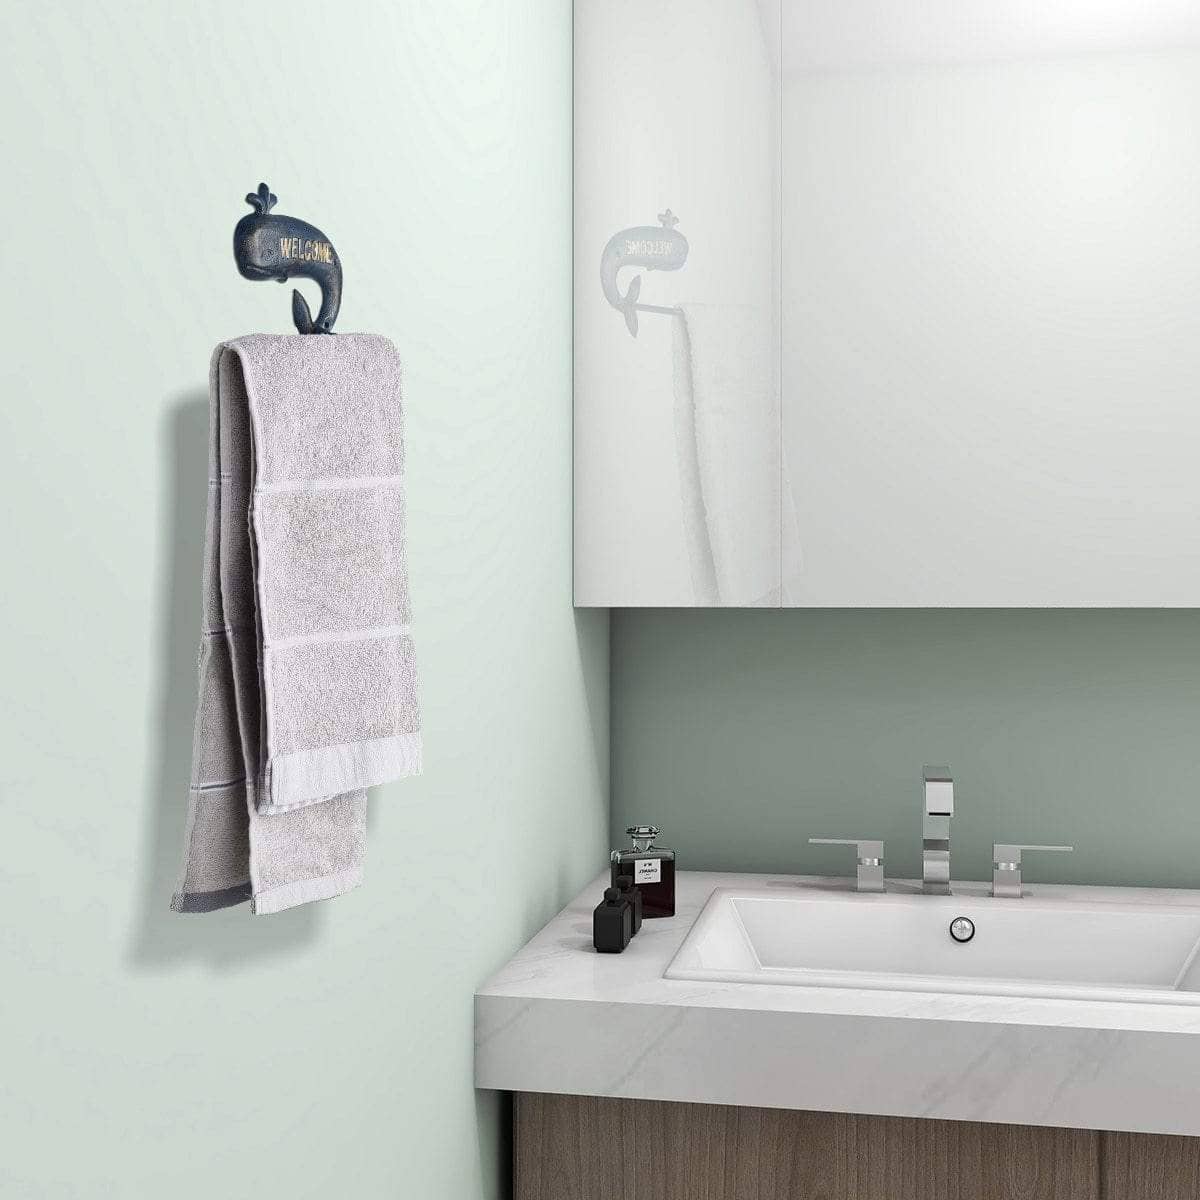 Whale Bathroom Holder Rack - Unique & Attractive Toilet Paper Roll Towel Holder